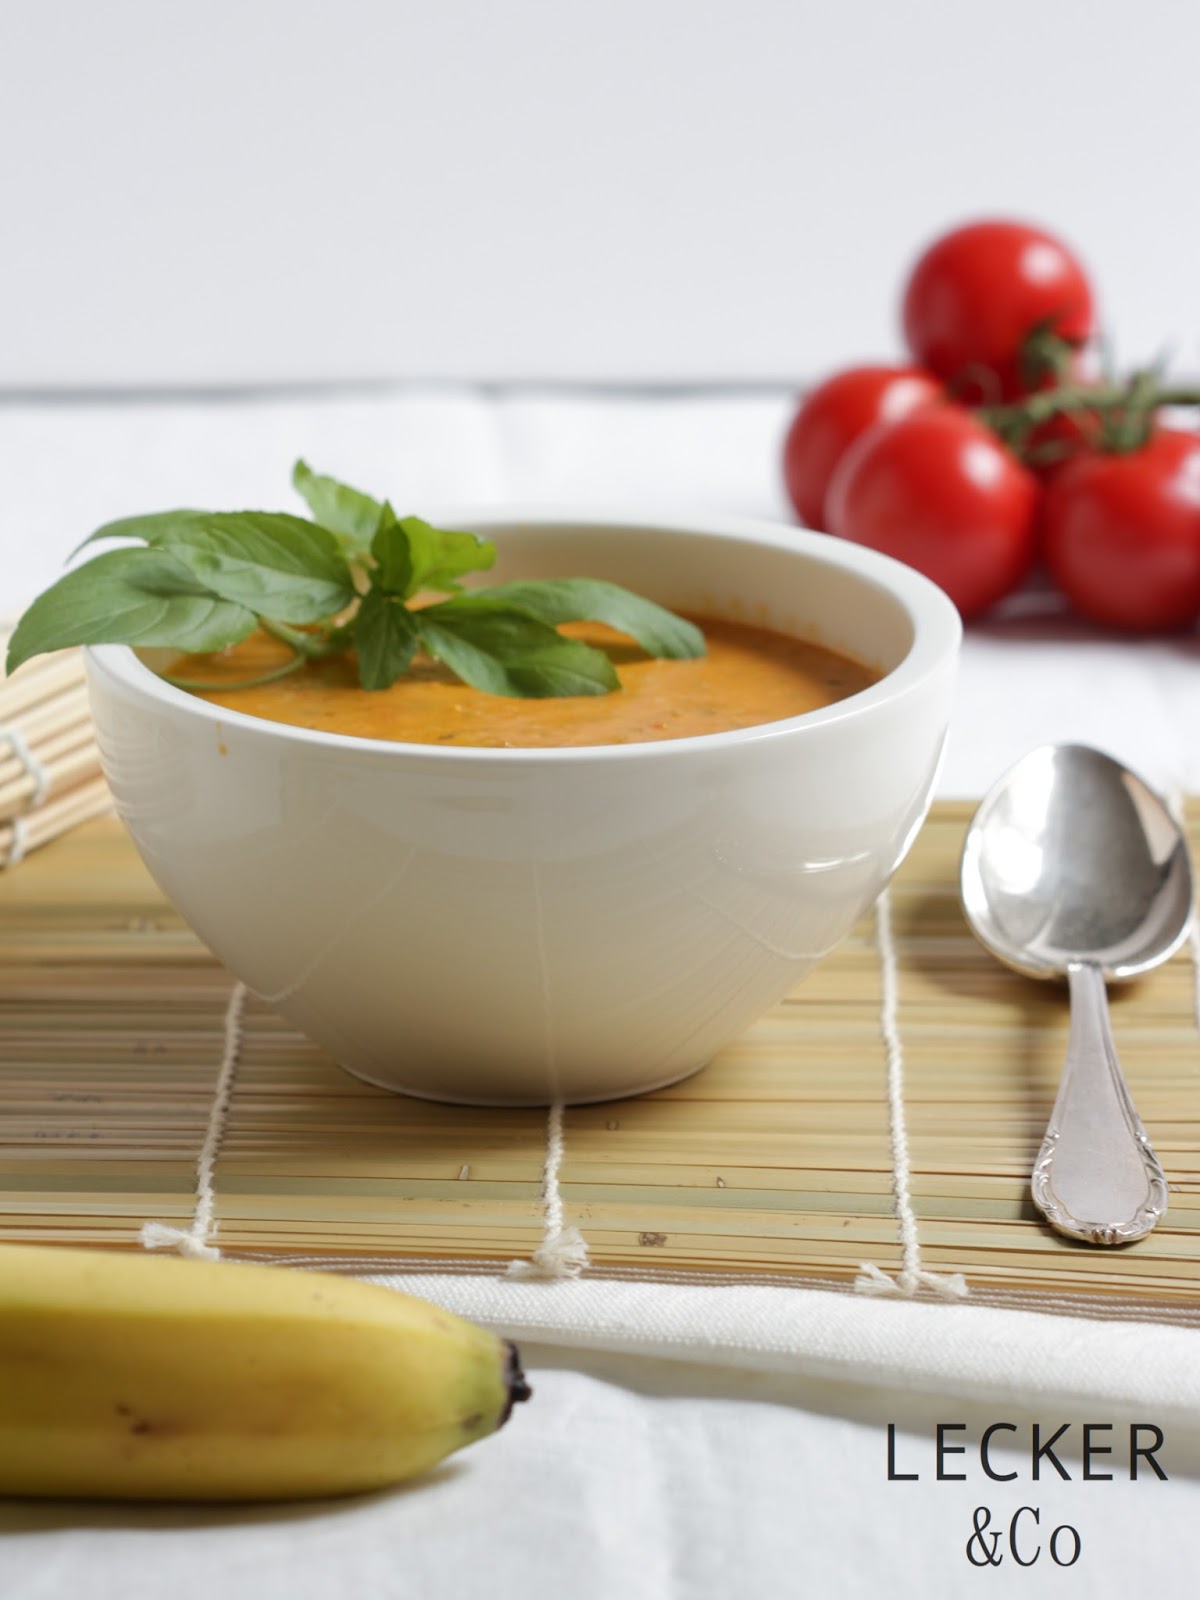 LECKER&amp;Co | Foodblog aus Nürnberg: Tomaten-Bananen-Suppe mit Thai-Curry ...